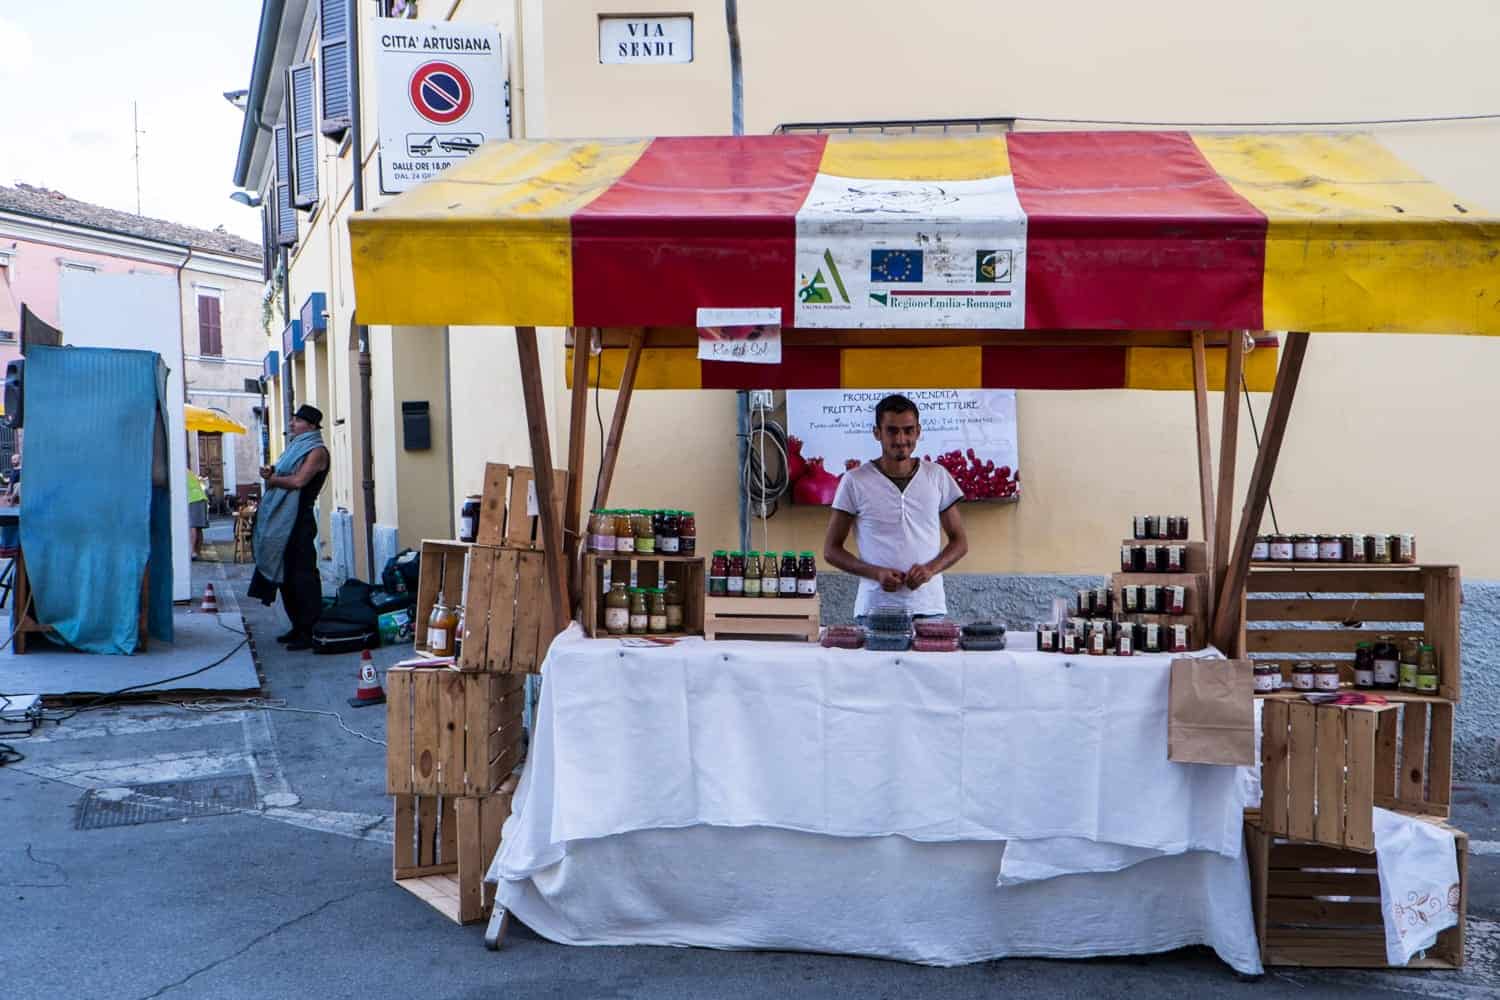 Food stand at Festa Artusiana in Forlimpopoli, Italy